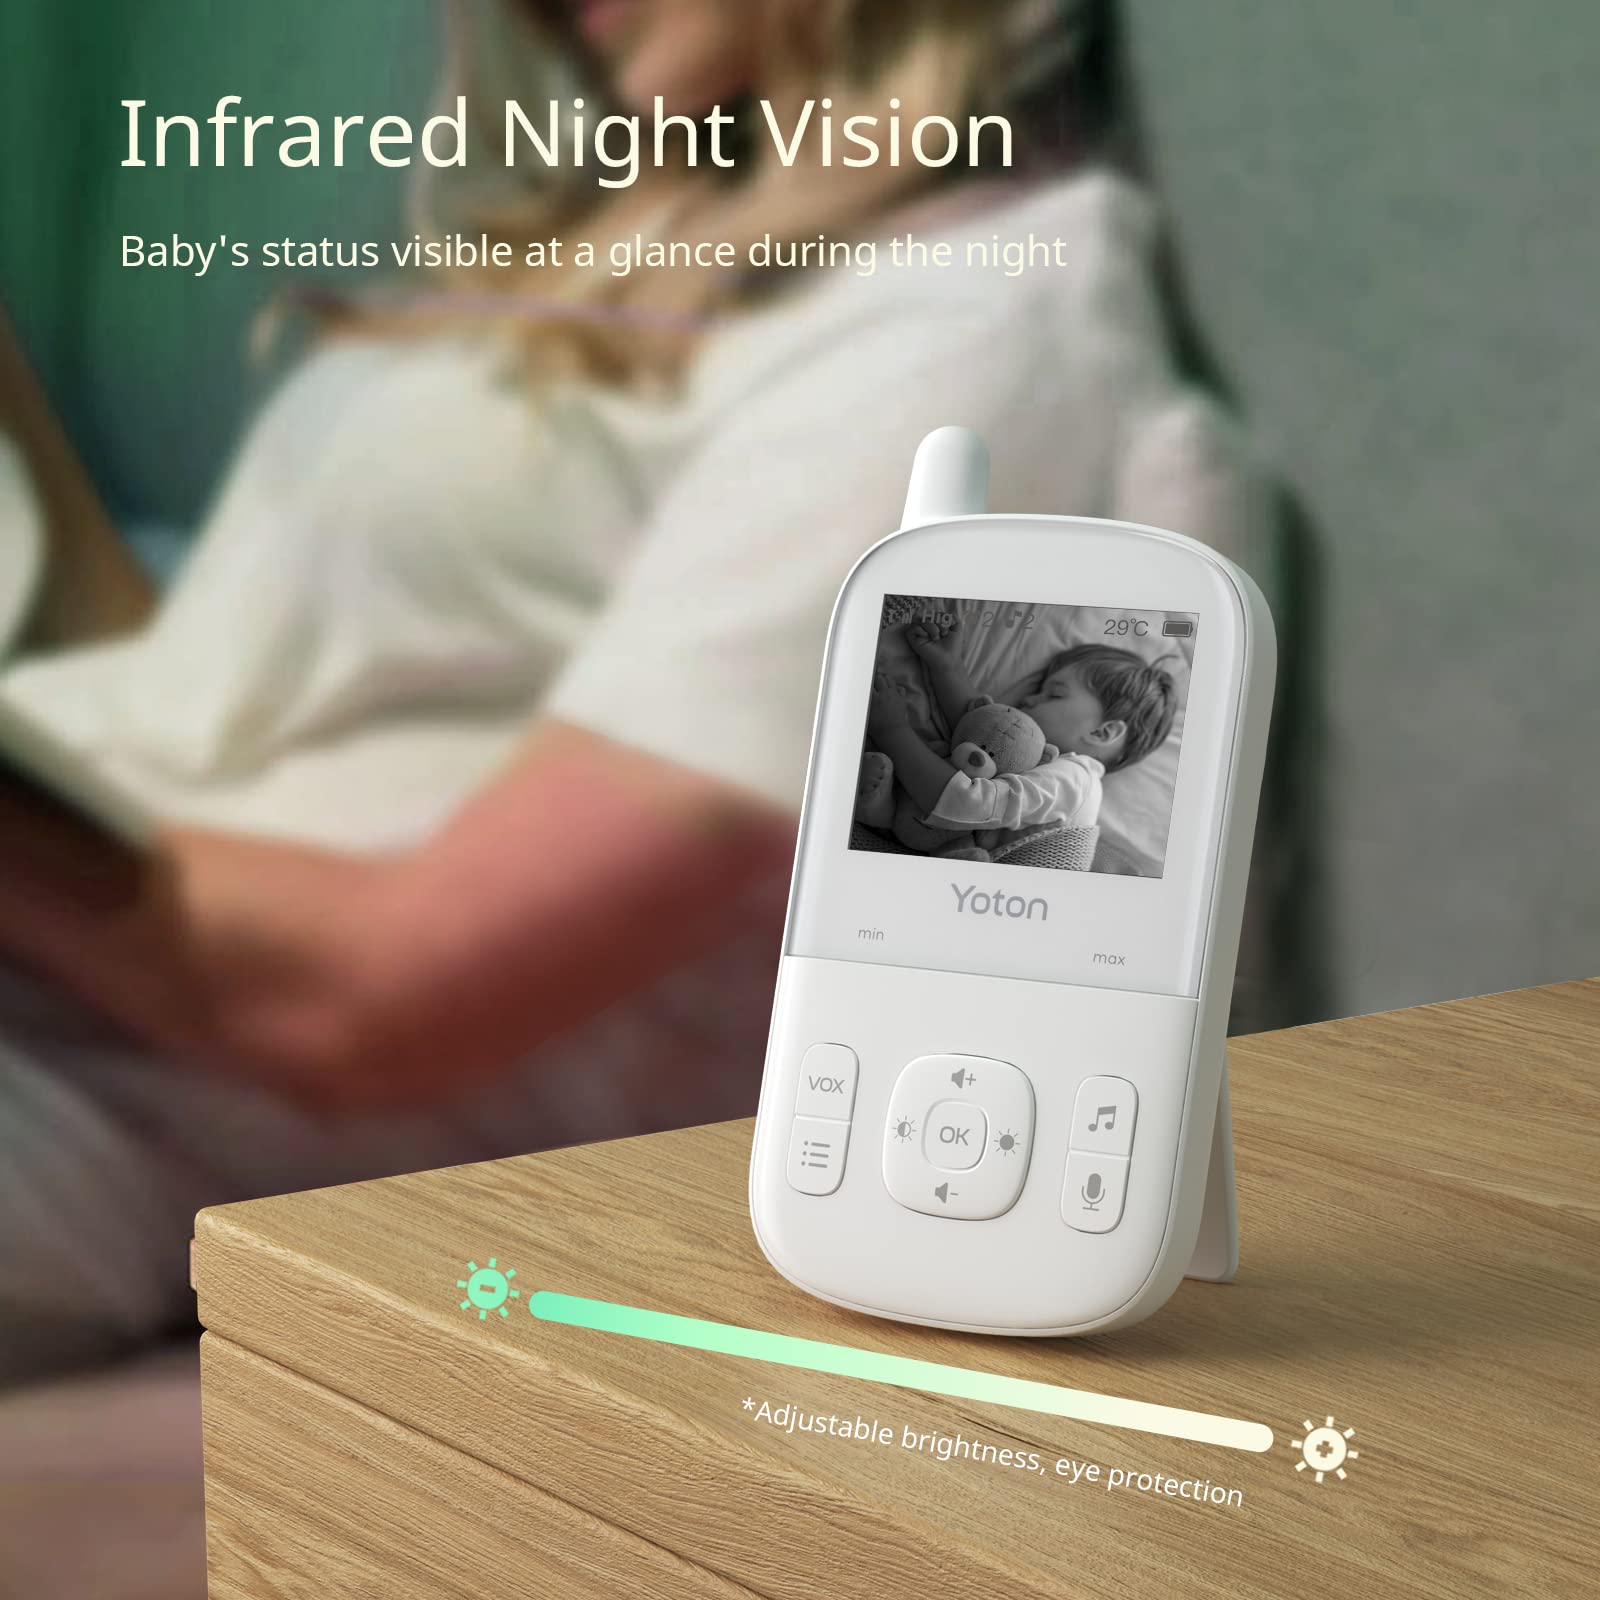 yoton YM04 portable baby monitor infrared night vision